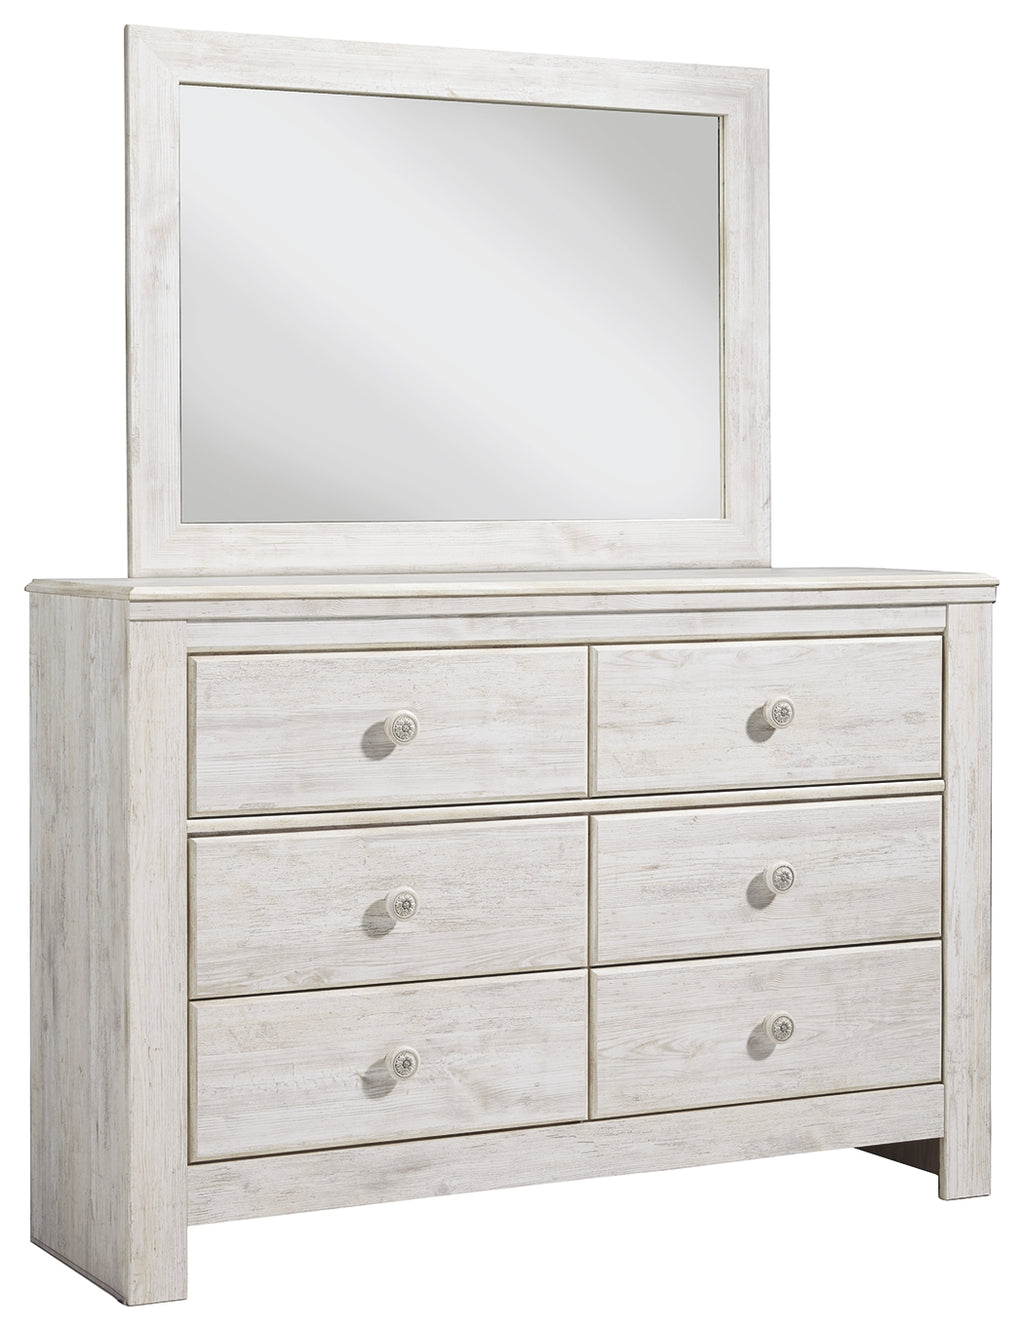 Paxberry B181B3 Whitewash Dresser and Mirror